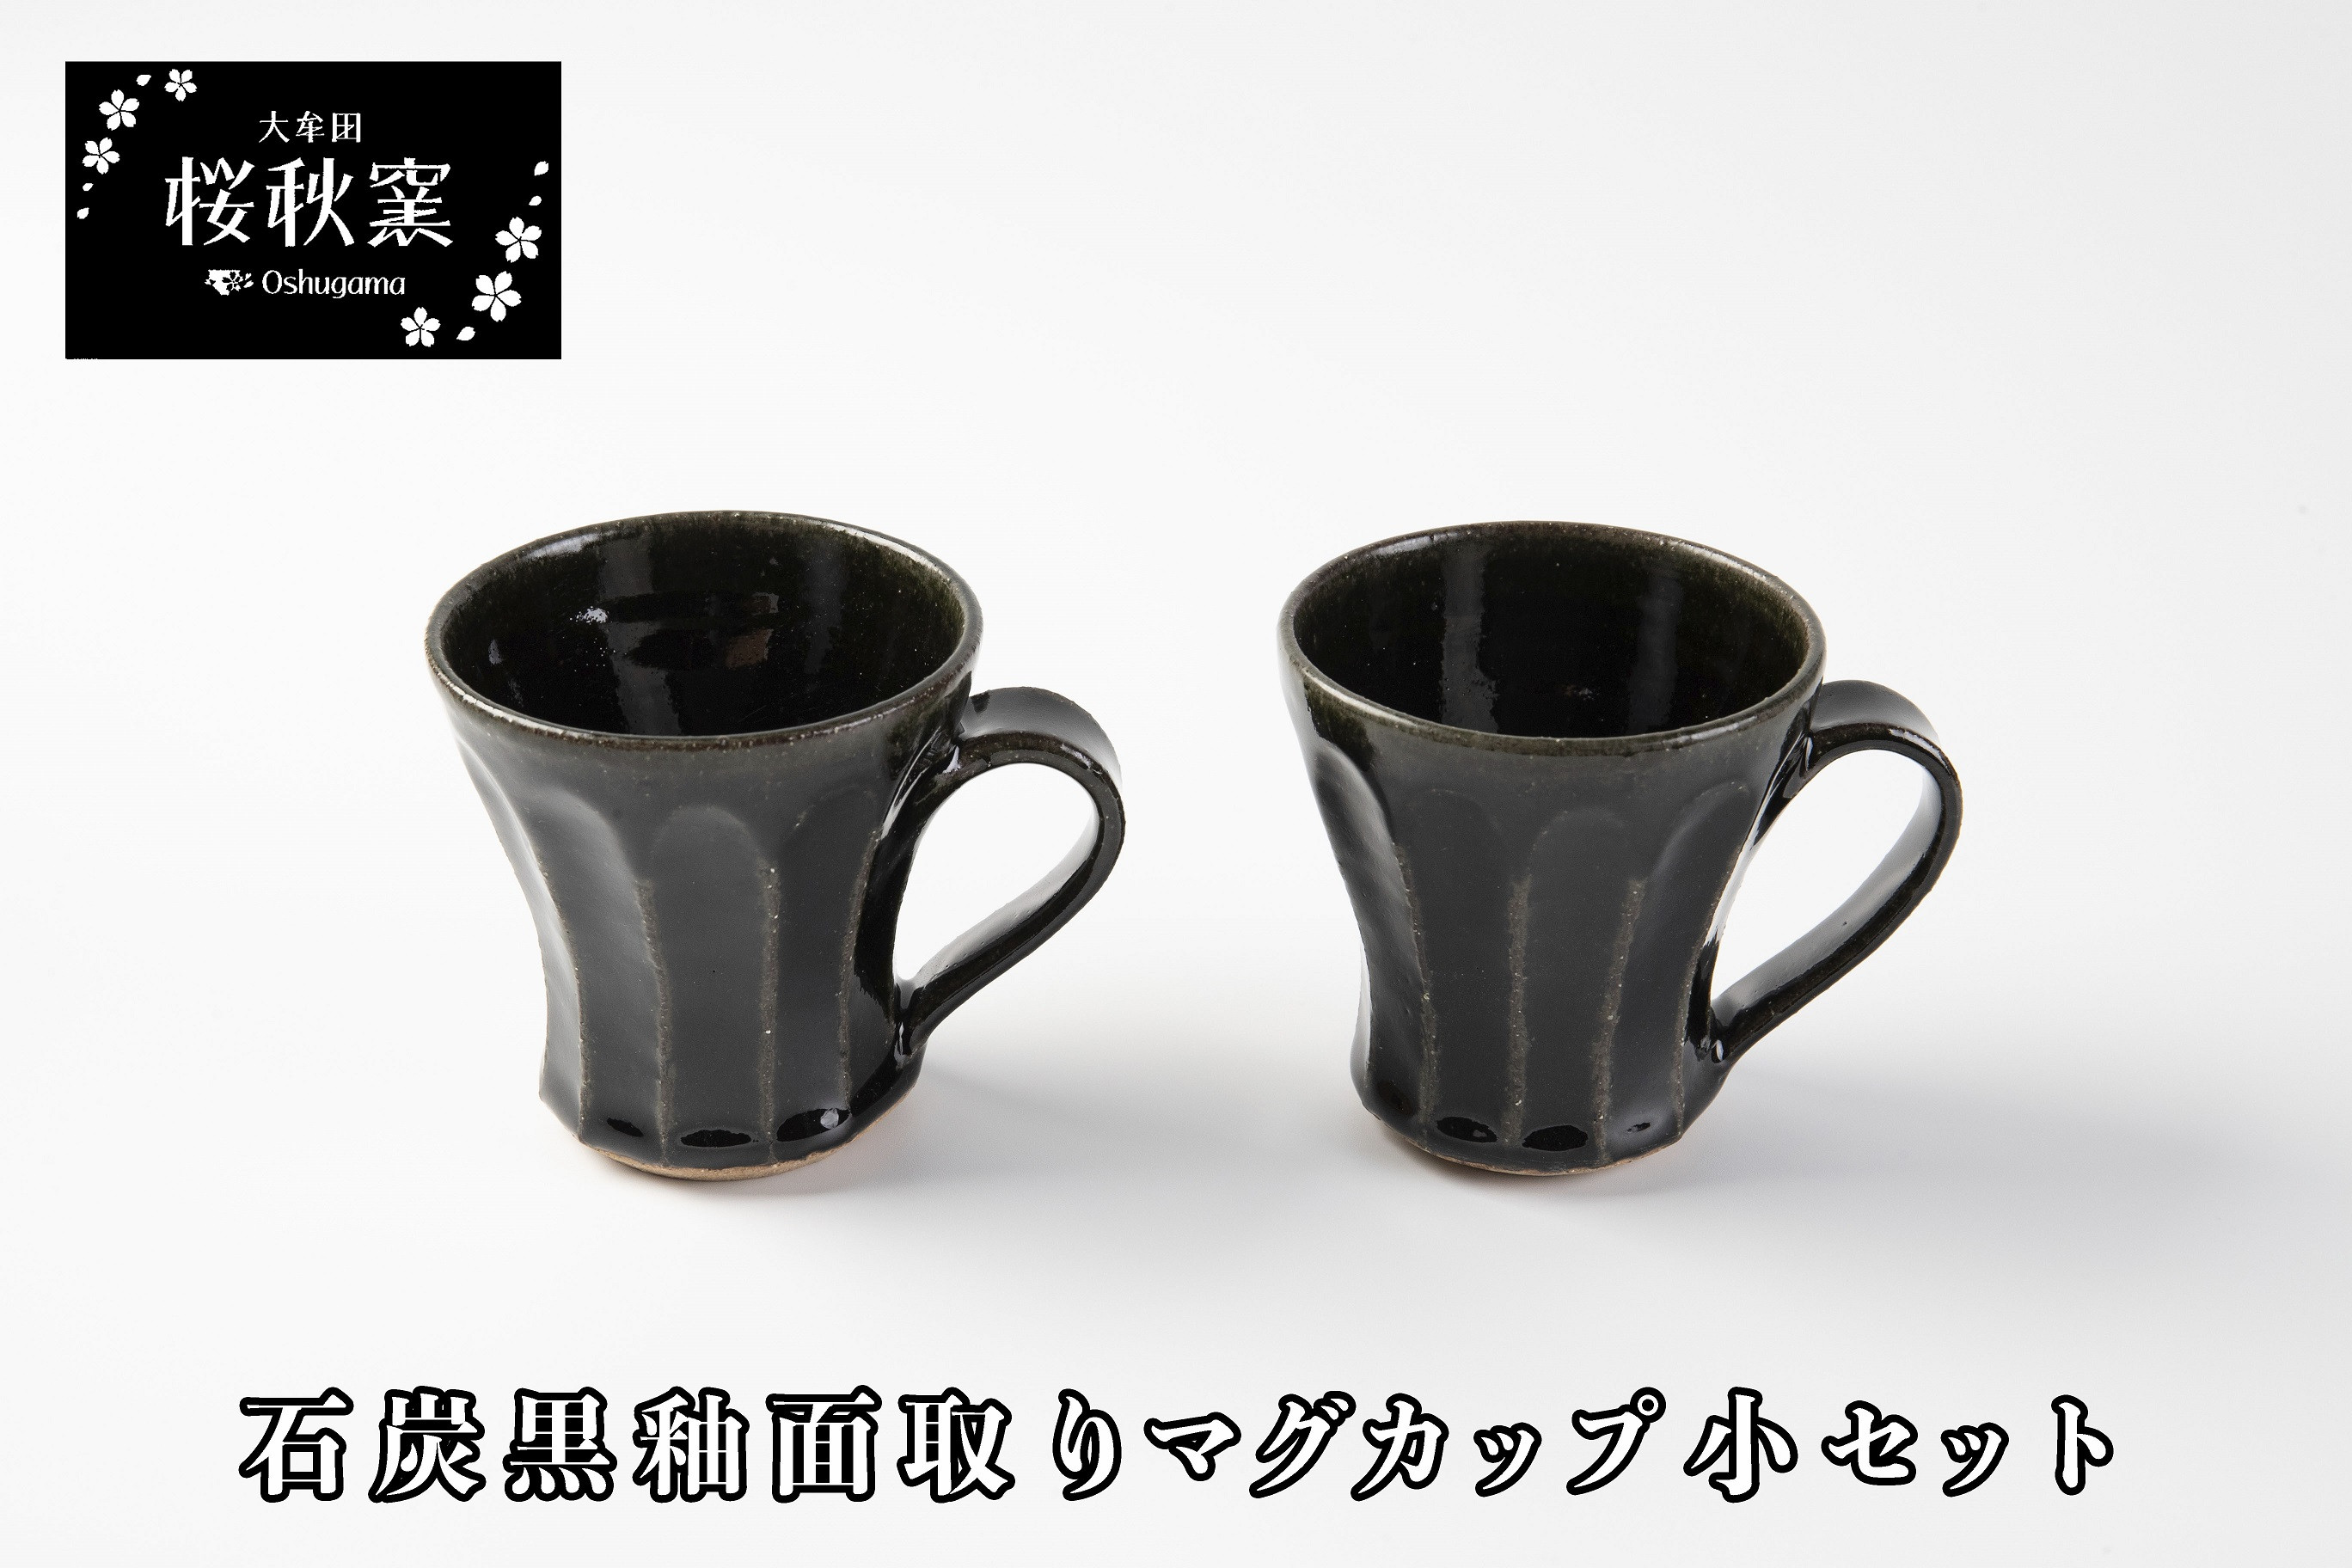 
【B-03】石炭黒釉面取りマグカップ小セット
